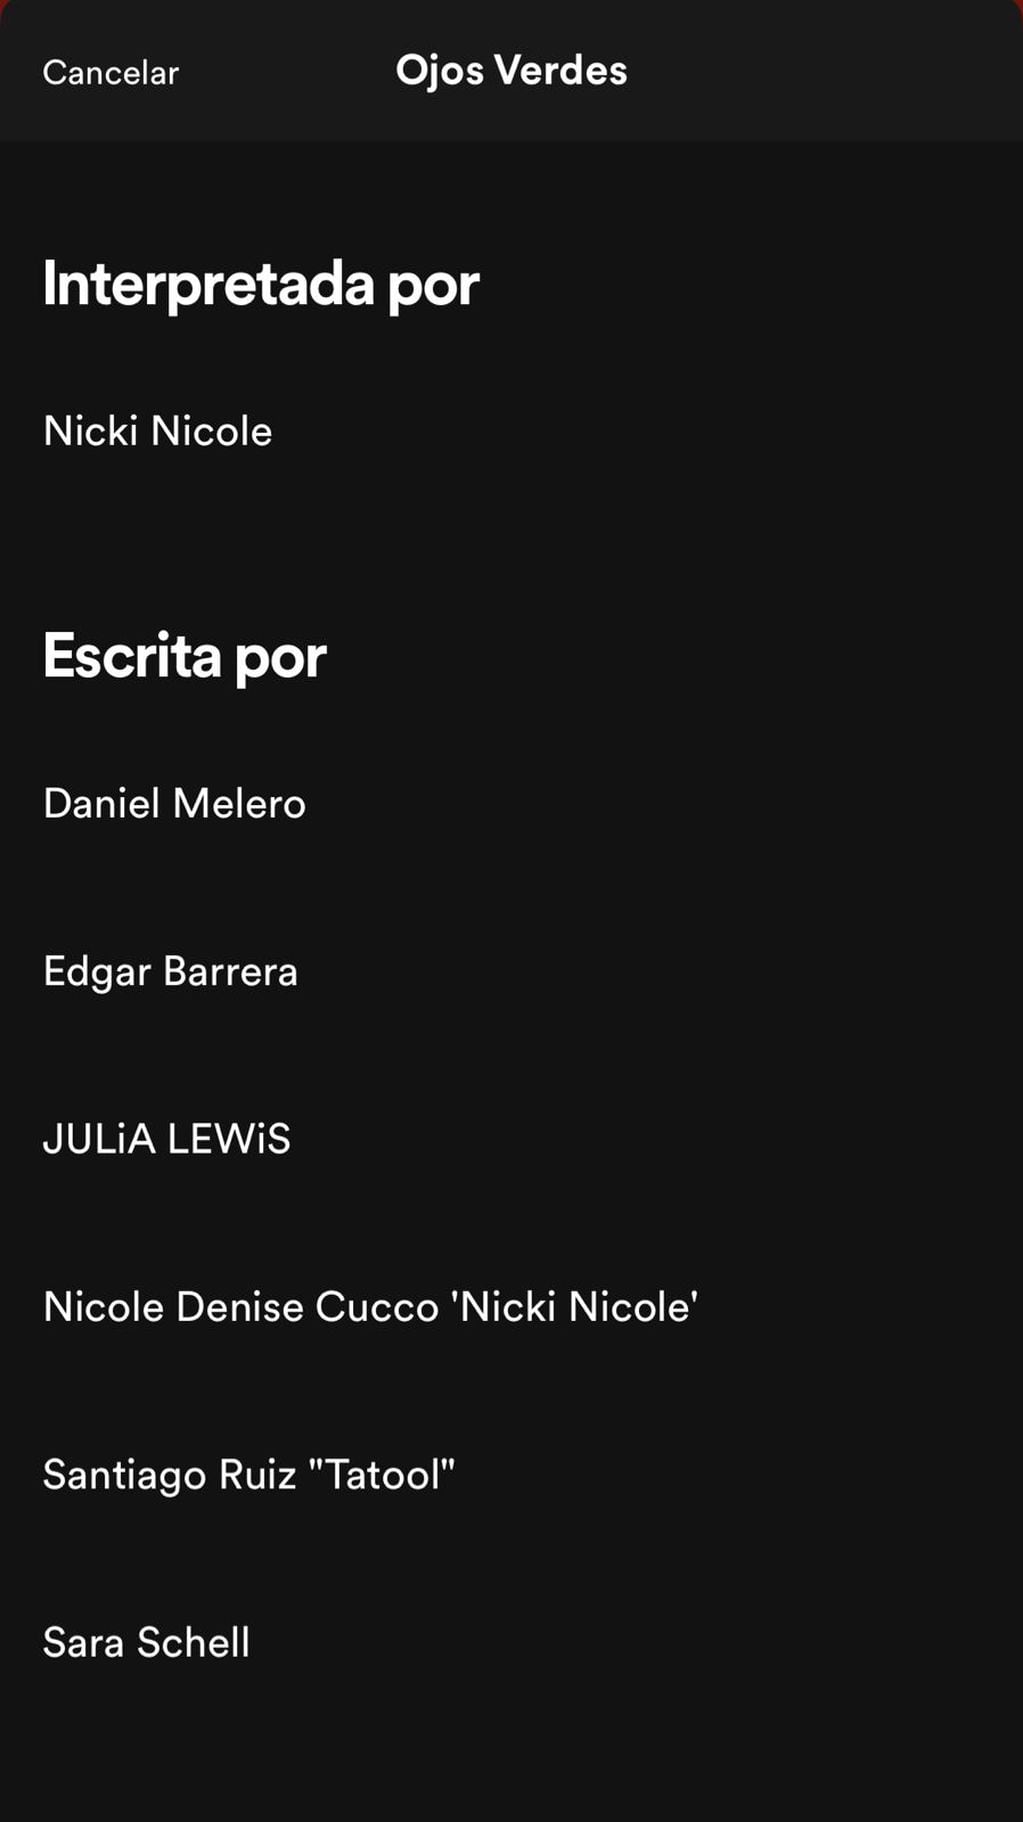 El homenaje de Nicki Nicole a Daniel Melero, Gustavo Cerati y Soda Stereo